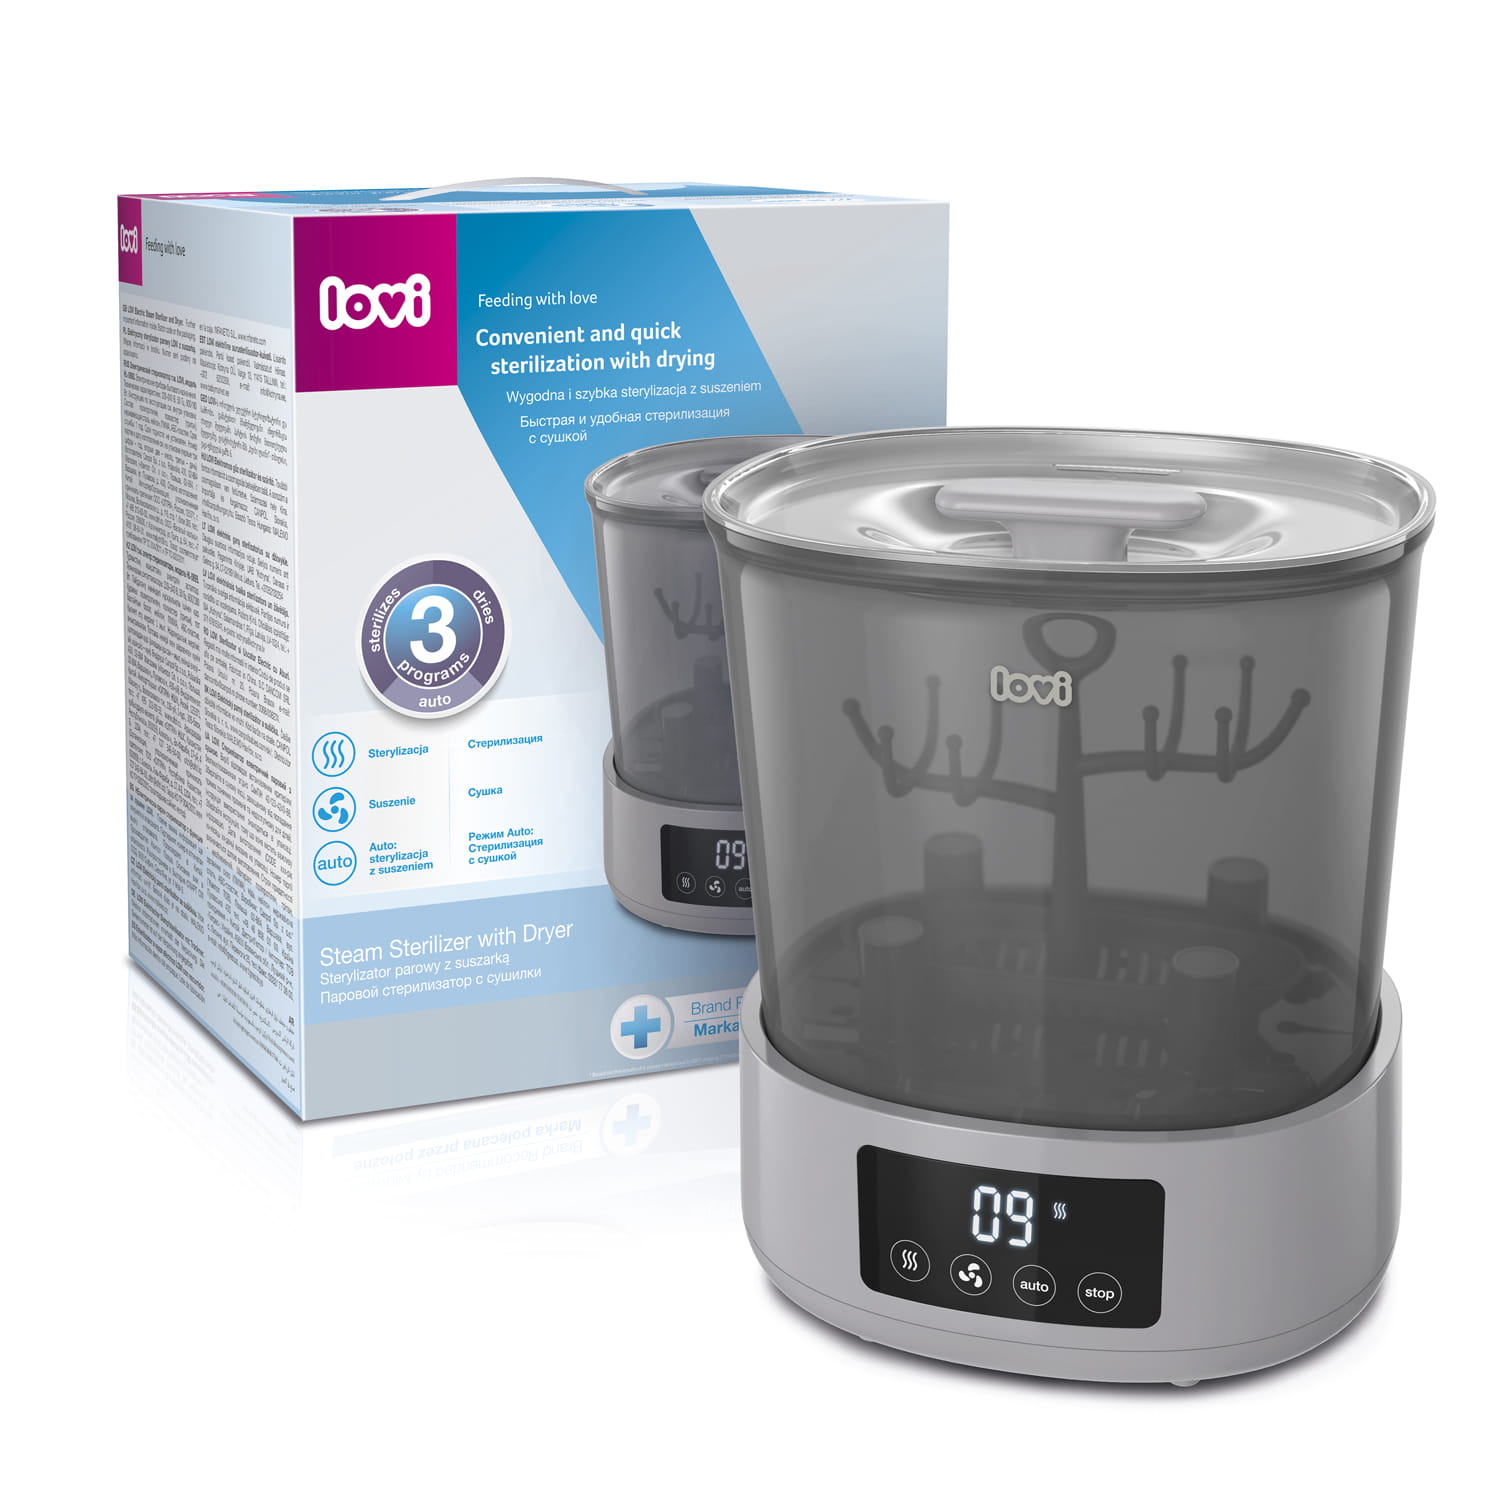 Lovi: electronic steam sterilizer with dryer